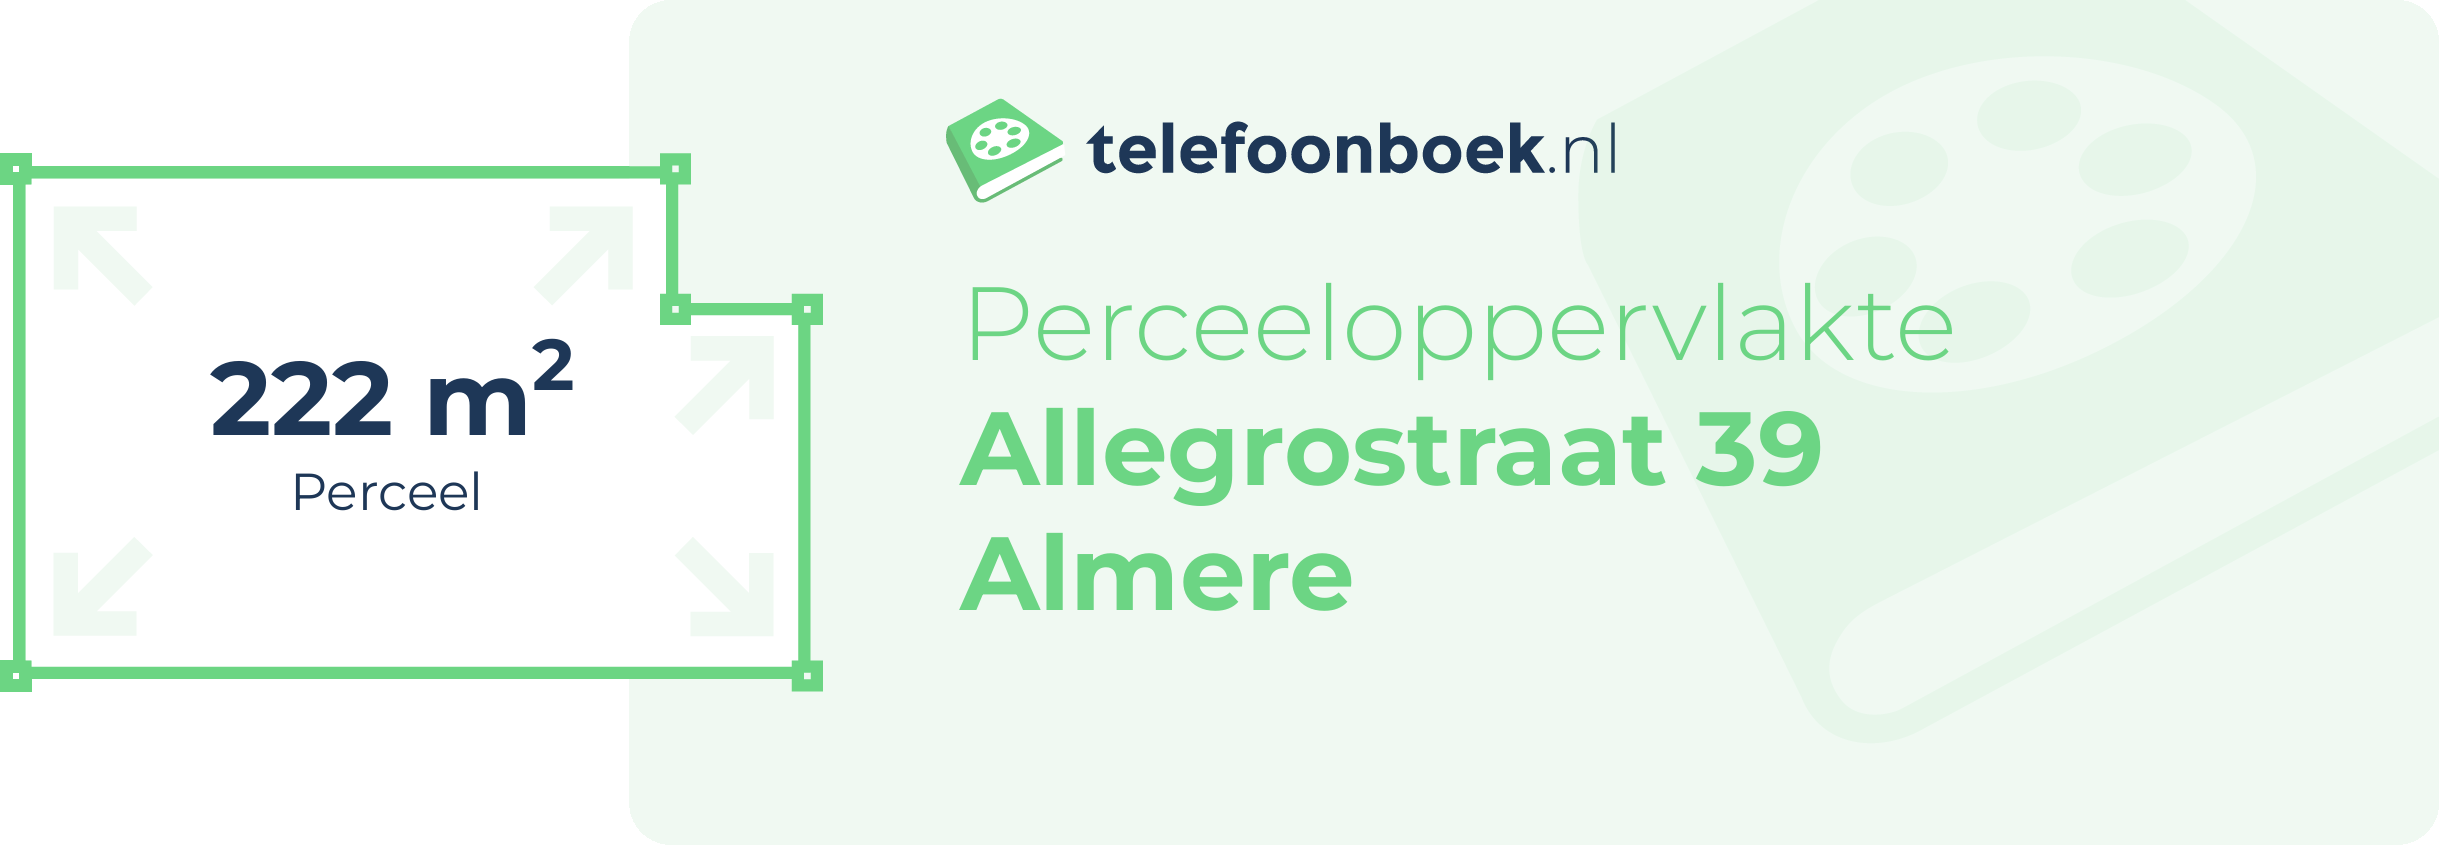 Perceeloppervlakte Allegrostraat 39 Almere